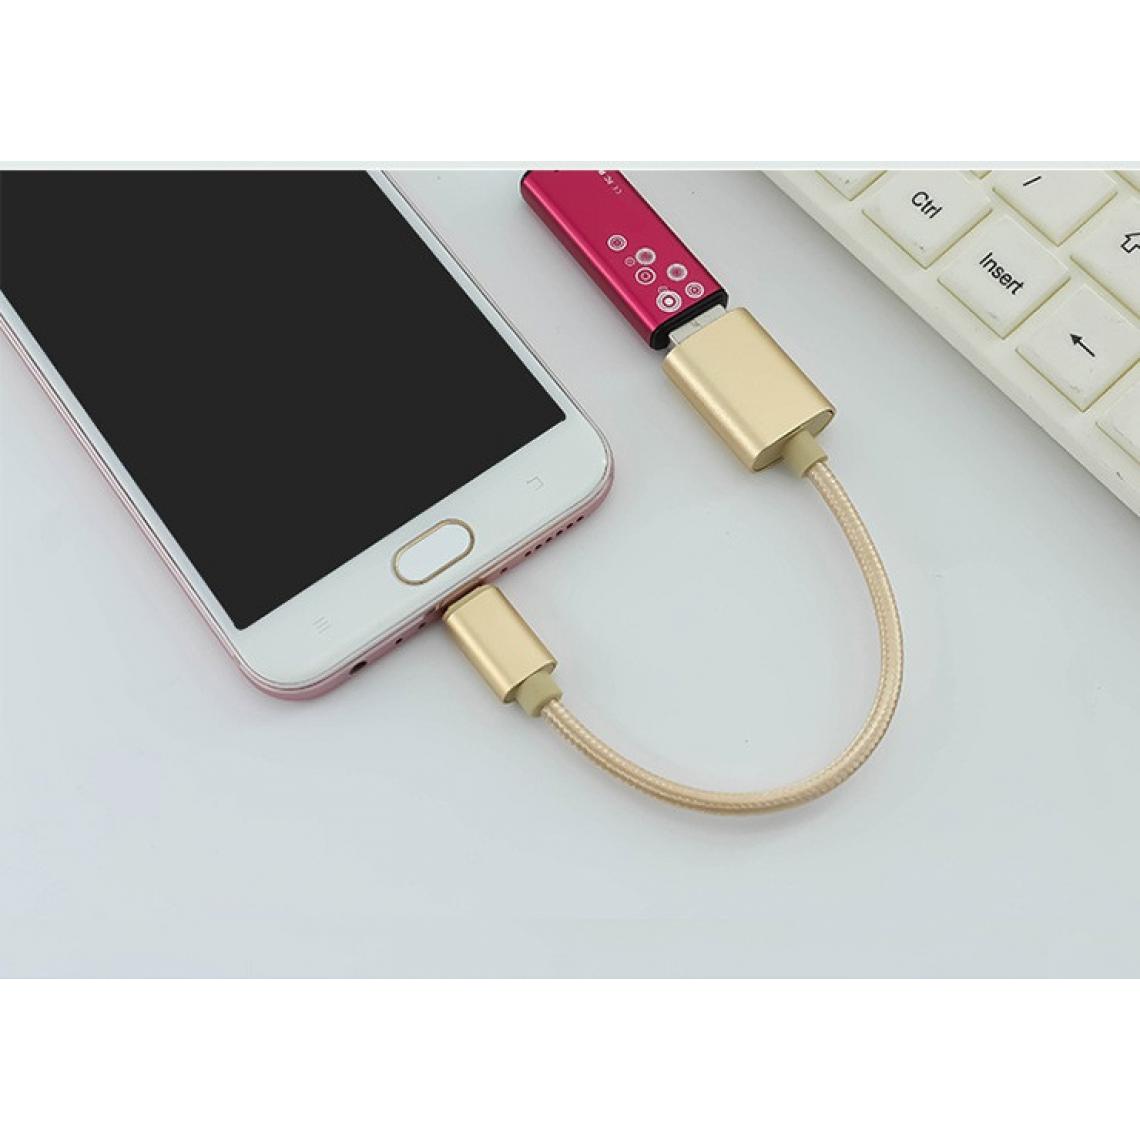 Shot - Adaptateur Type C/USB pour SONY Xperia 1 Smartphone & MAC USB-C Clef (OR) - Autres accessoires smartphone